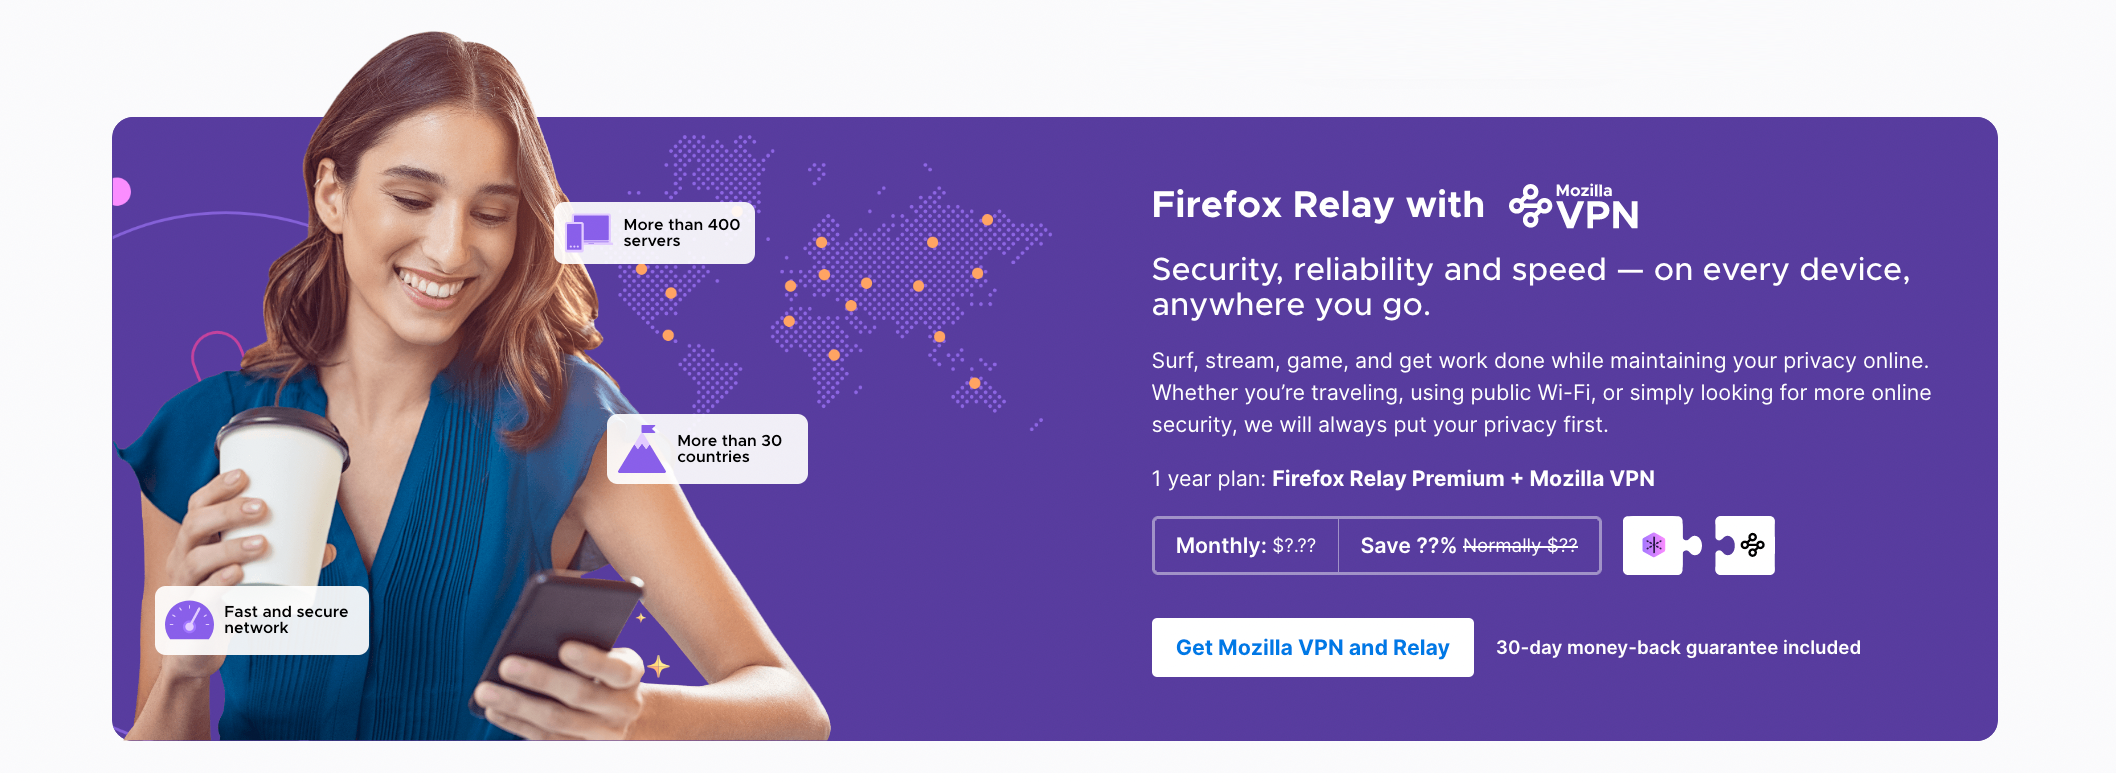 firefox-relay-mozilla-vpn